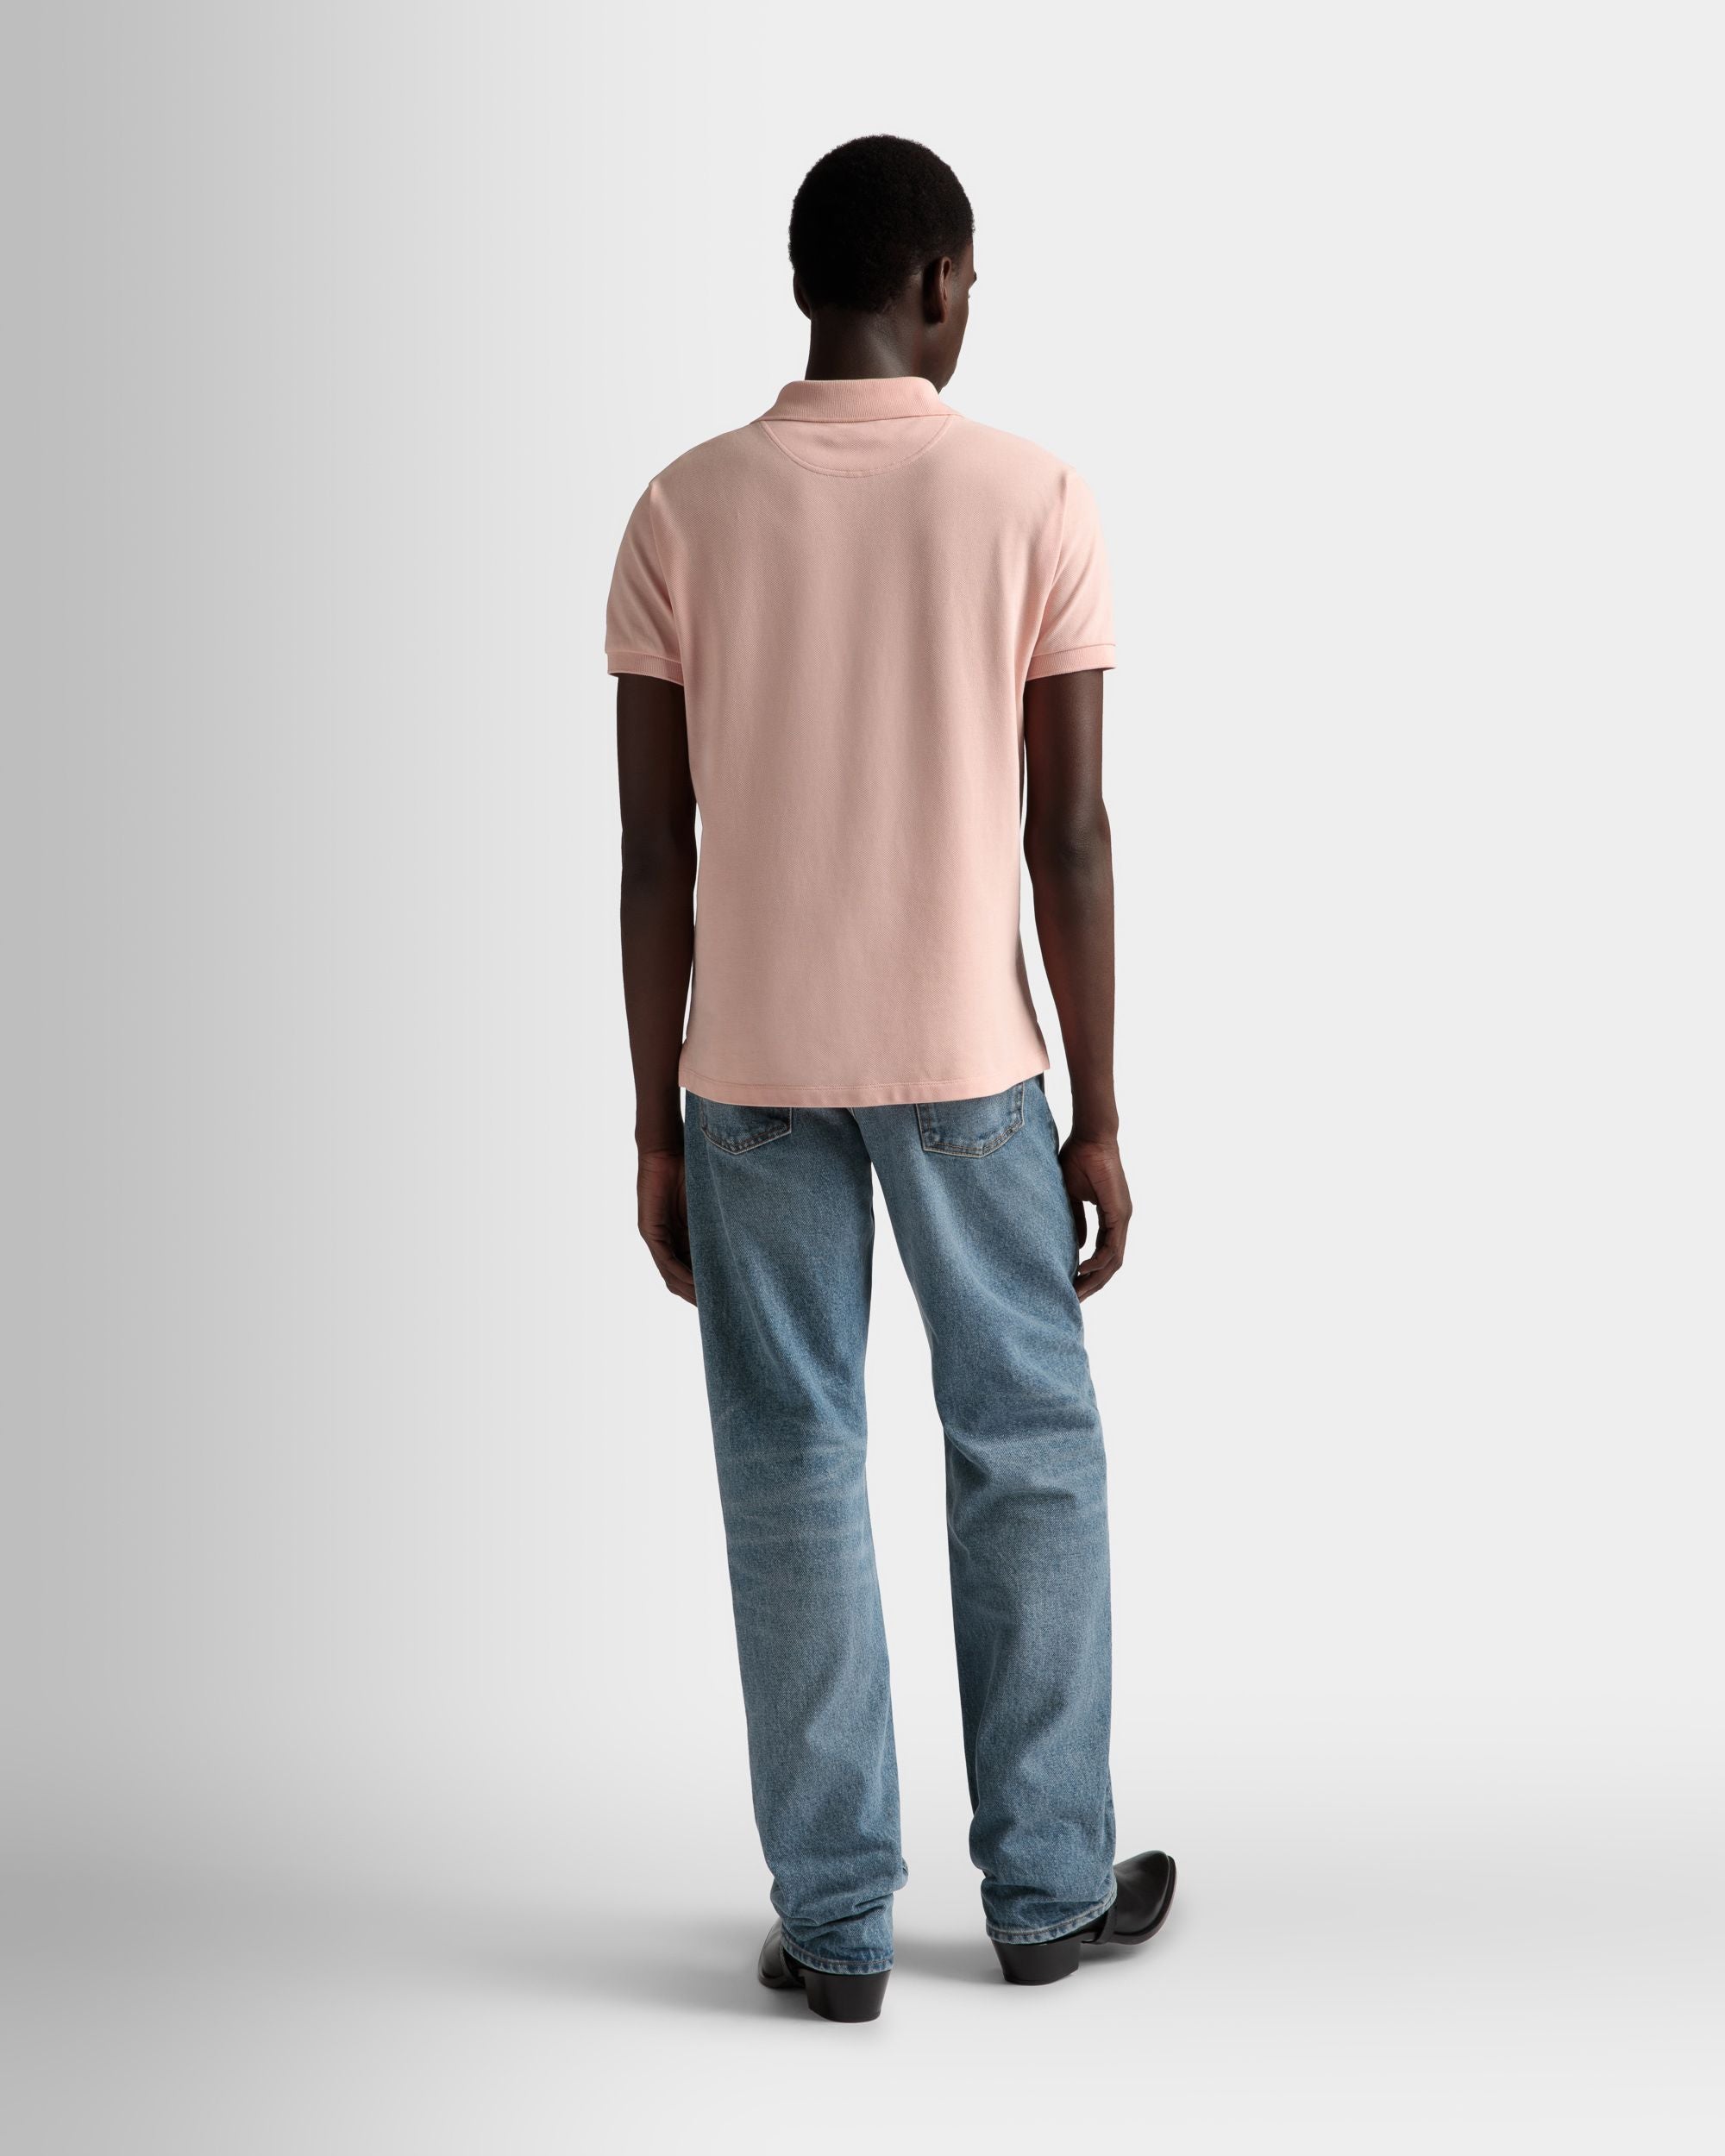 Kurzarm-Poloshirt | Poloshirt für Herren | Baumwolle in Dusty Petal | Bally | Model getragen Rückseite